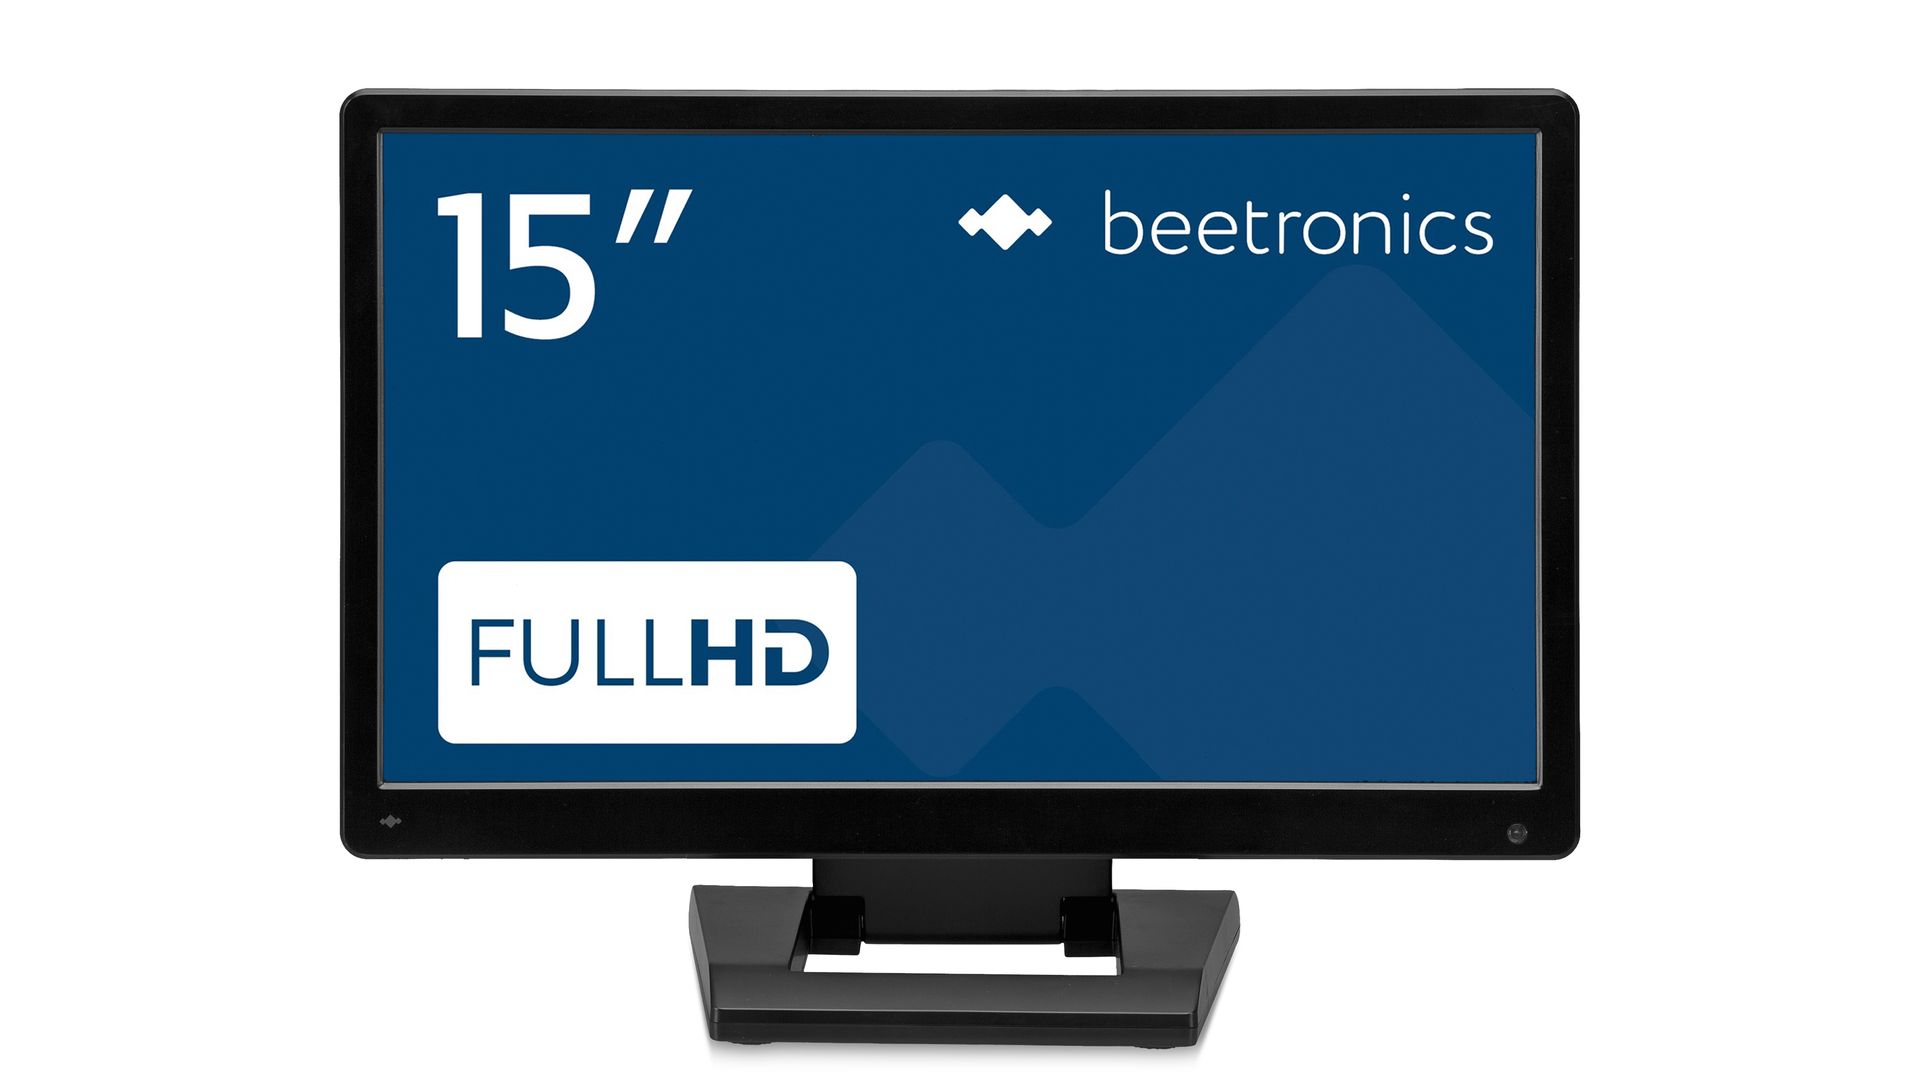 15 inch monitor Full HD | Beetronics